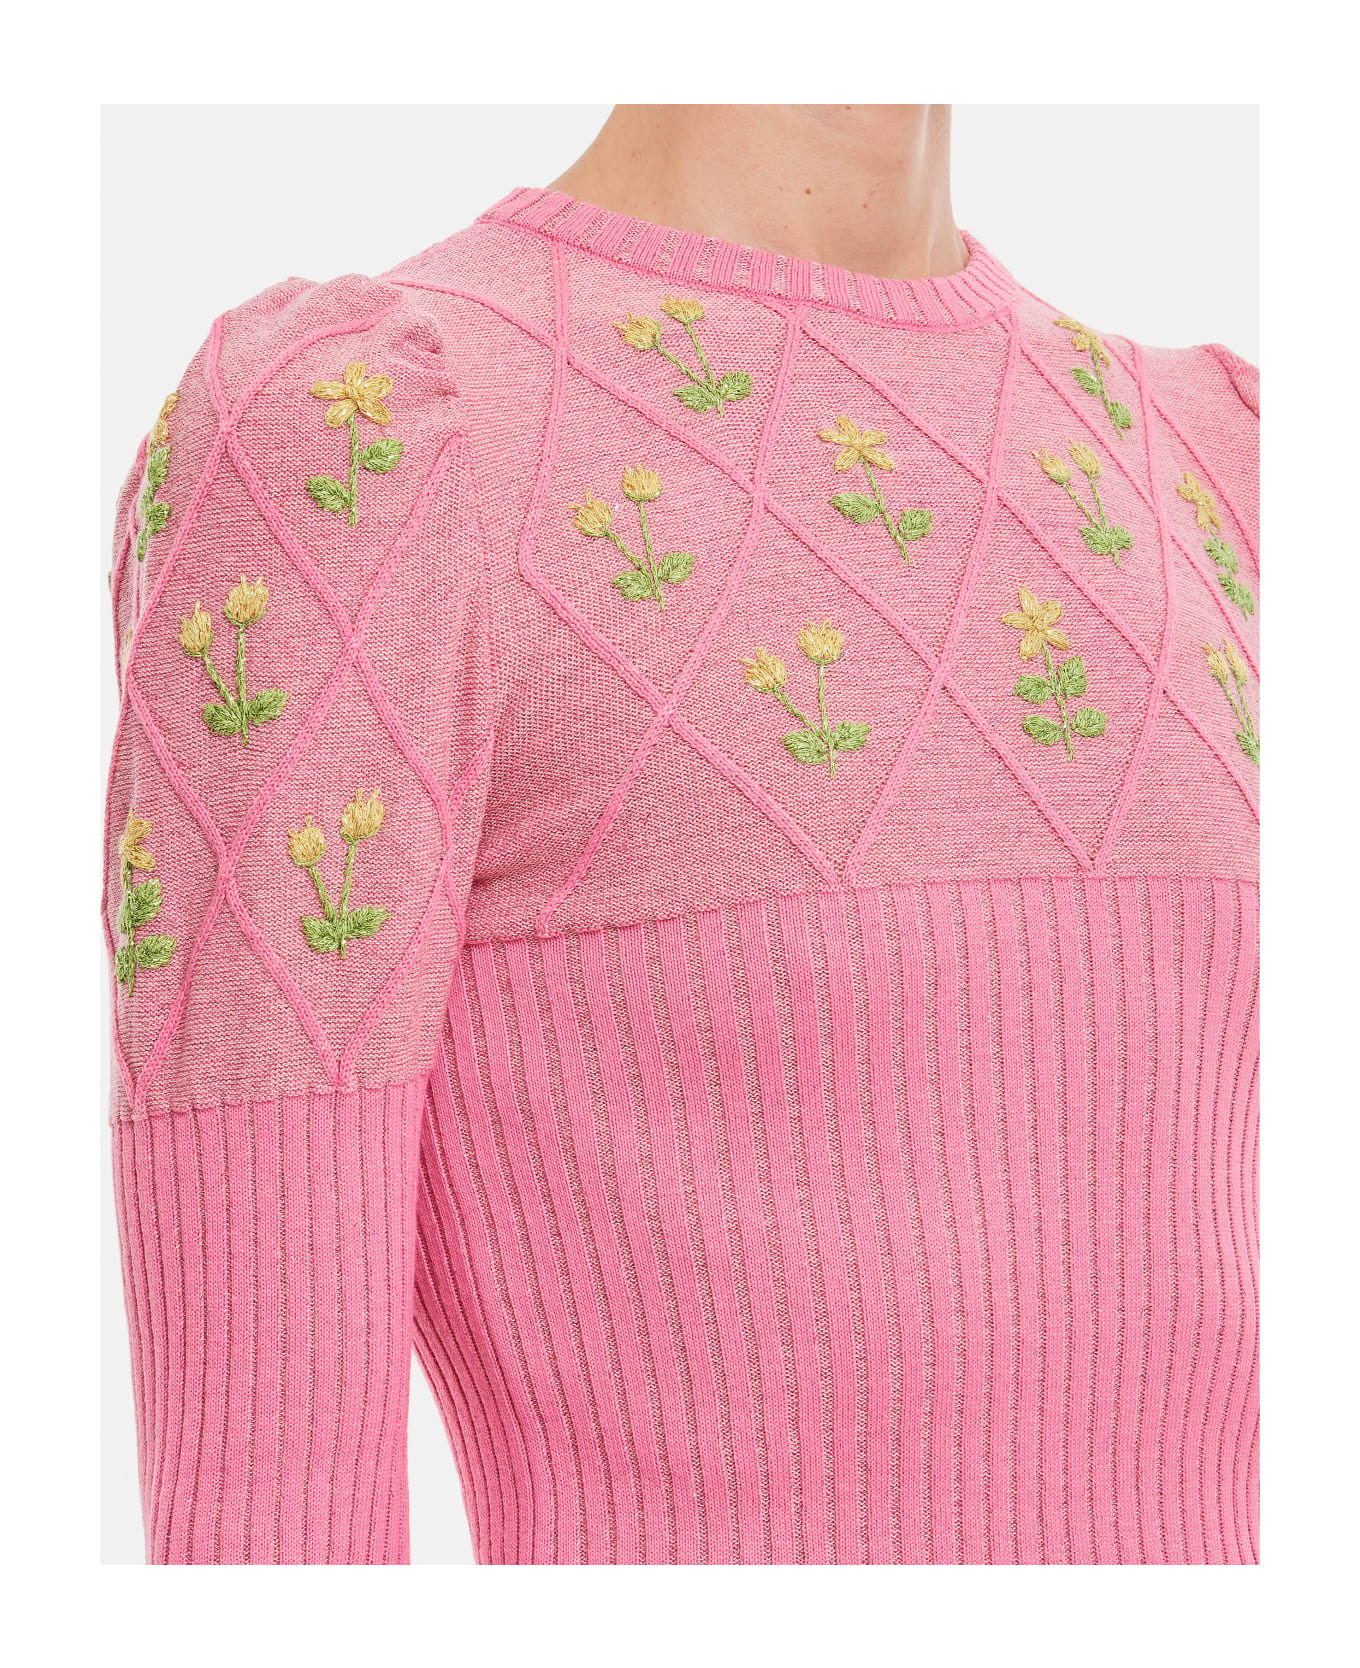 Cormio Oma 12 Cotton Glitter Sweater - Pink